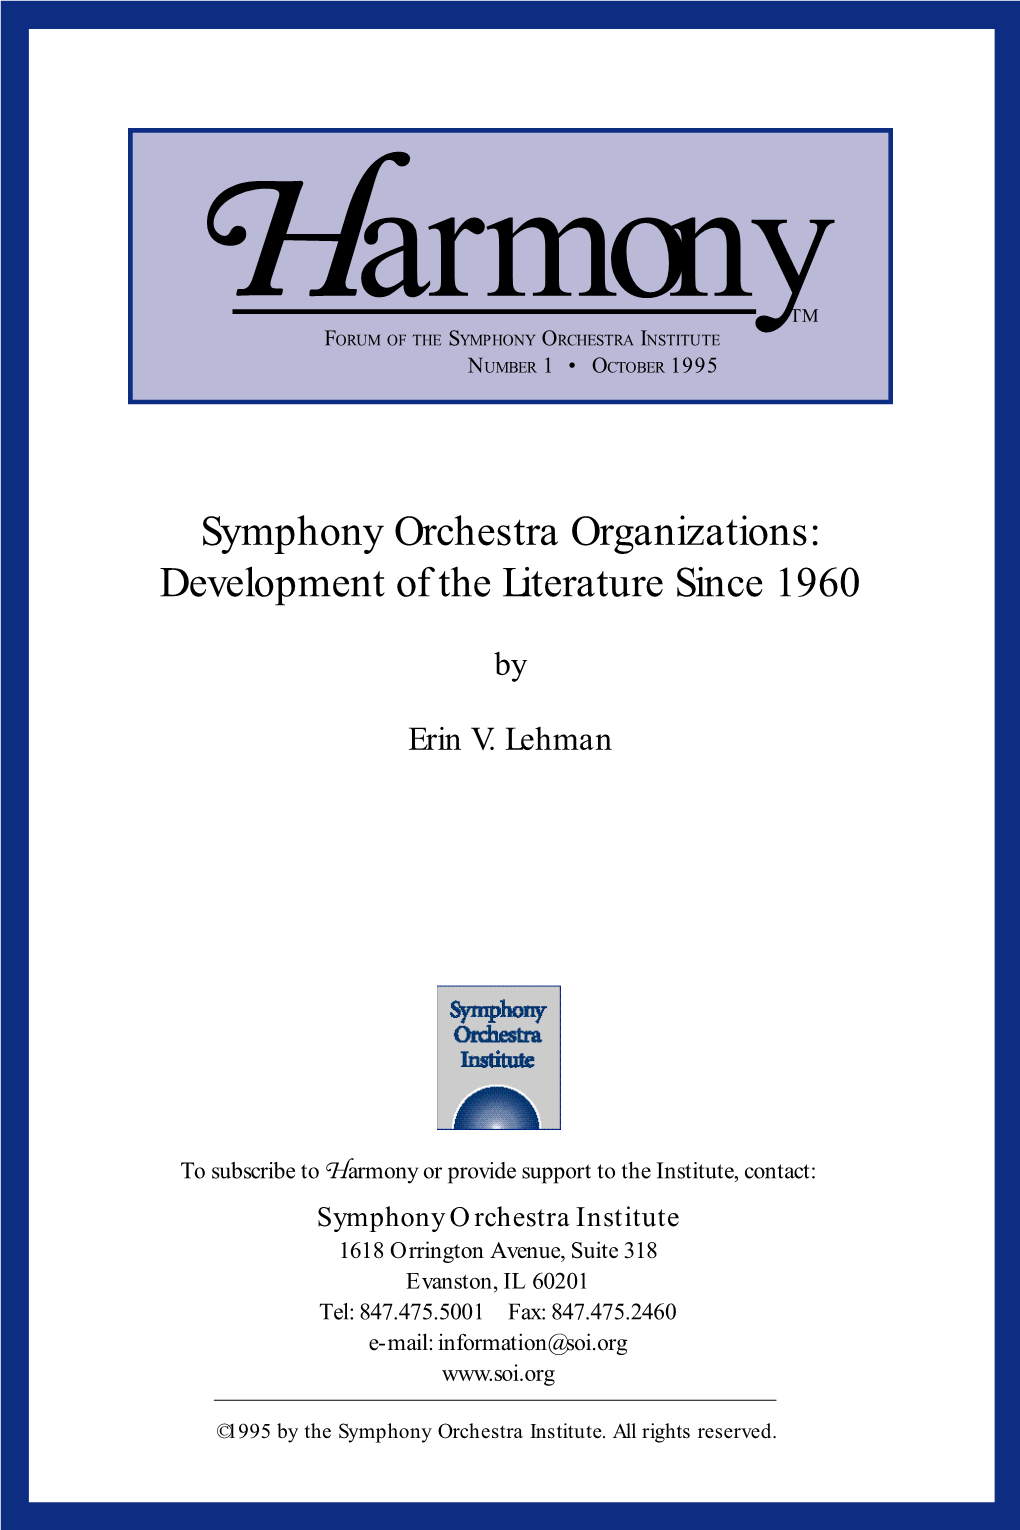 Symphony Orchestra Organizations: Development of the Literature Since 1960